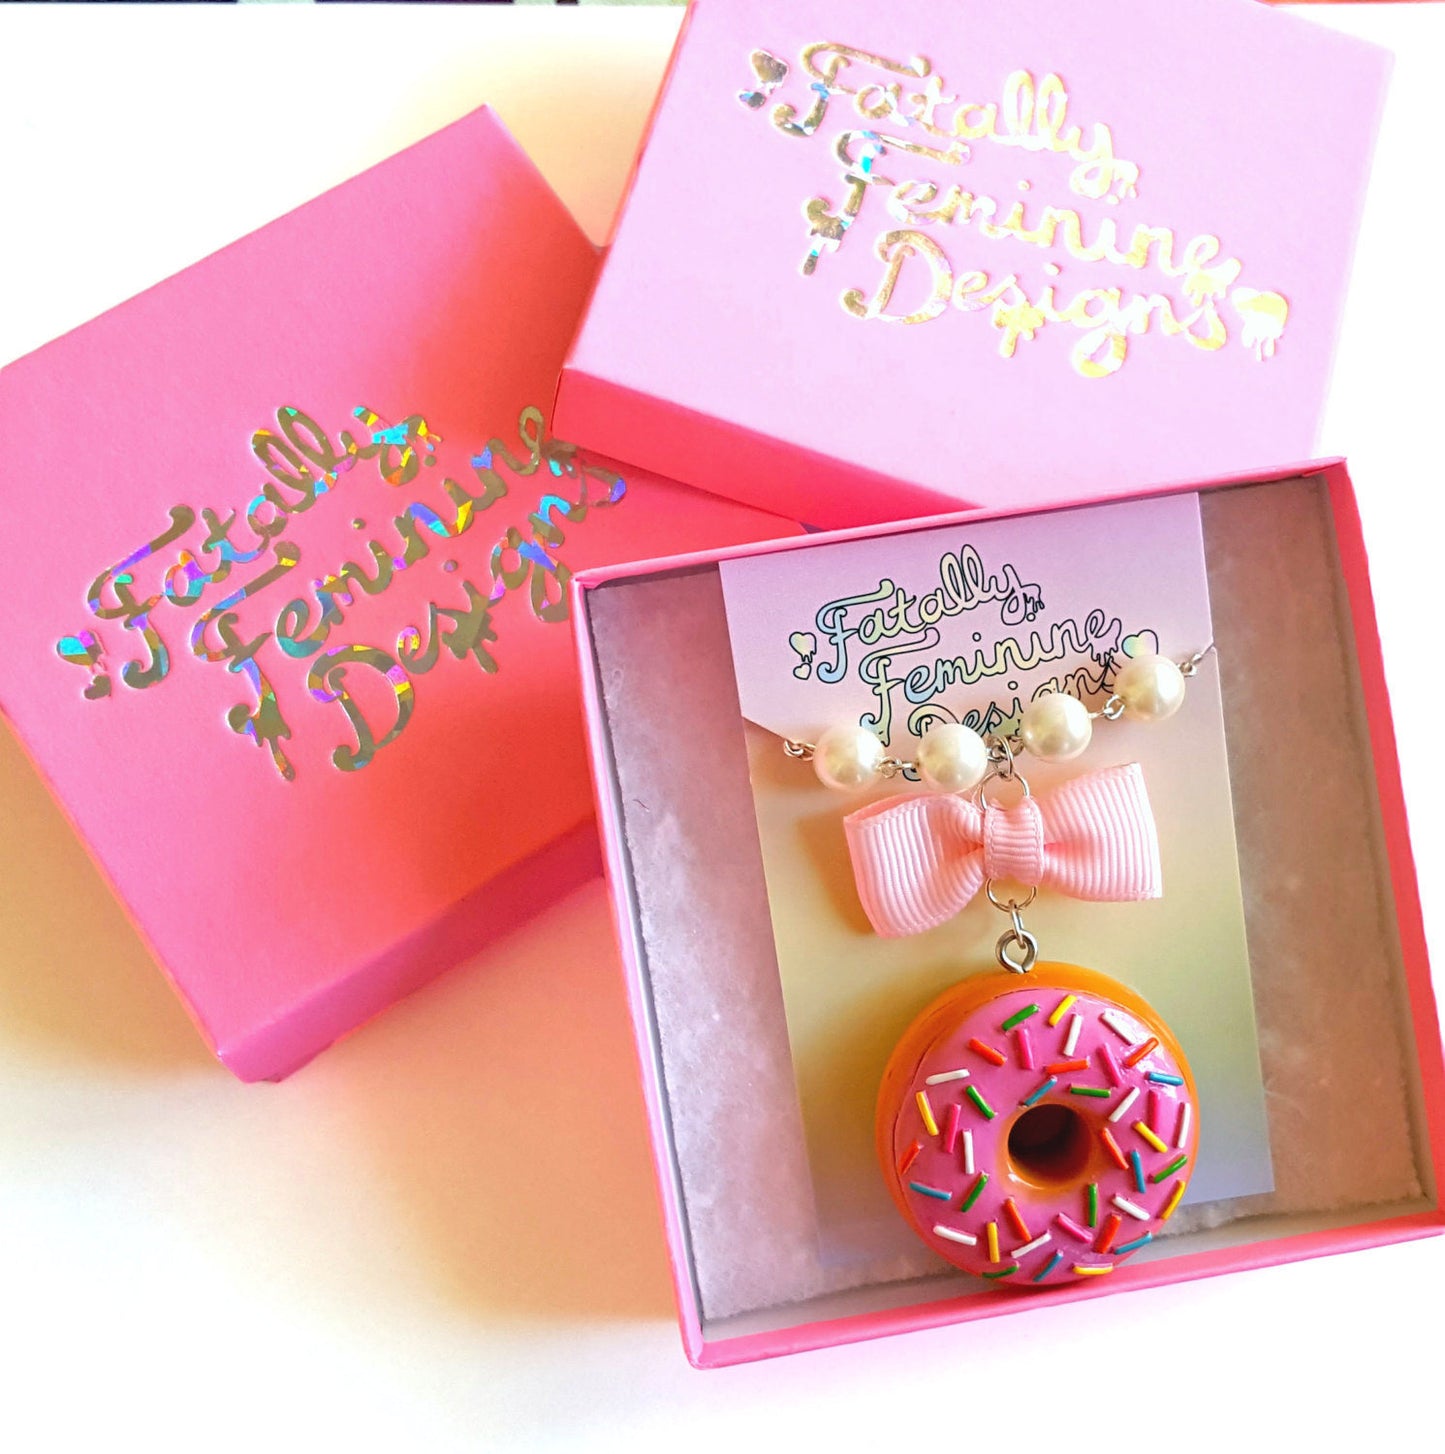 Confetti Cupcake Earrings